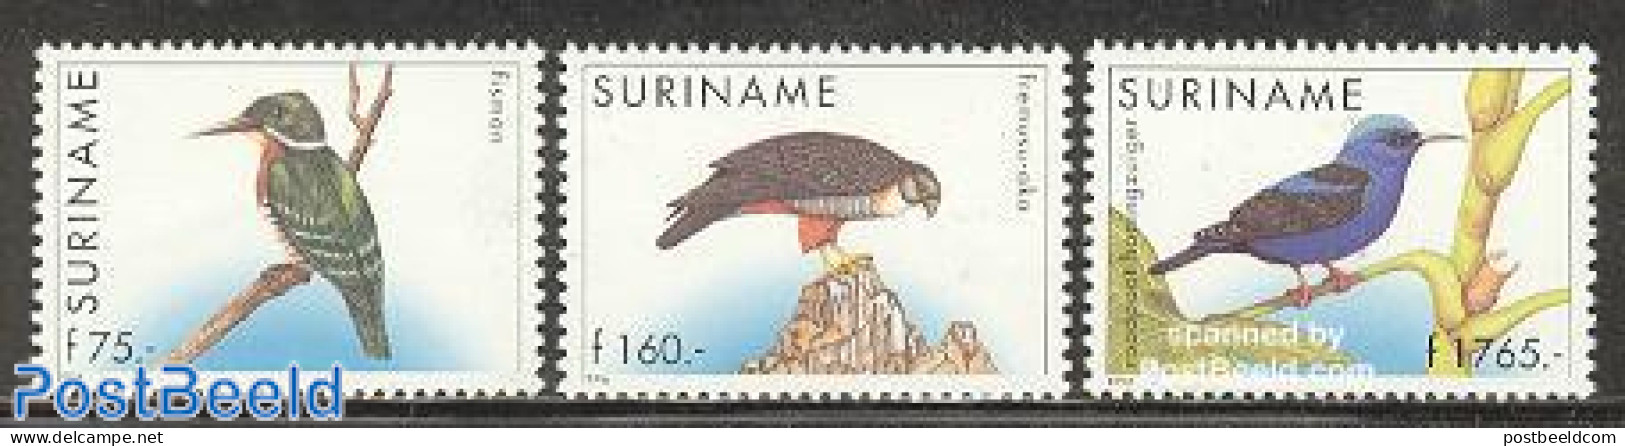 Suriname, Republic 1996 Birds 3v (75g,160g,1765g), Mint NH, Nature - Birds - Surinam